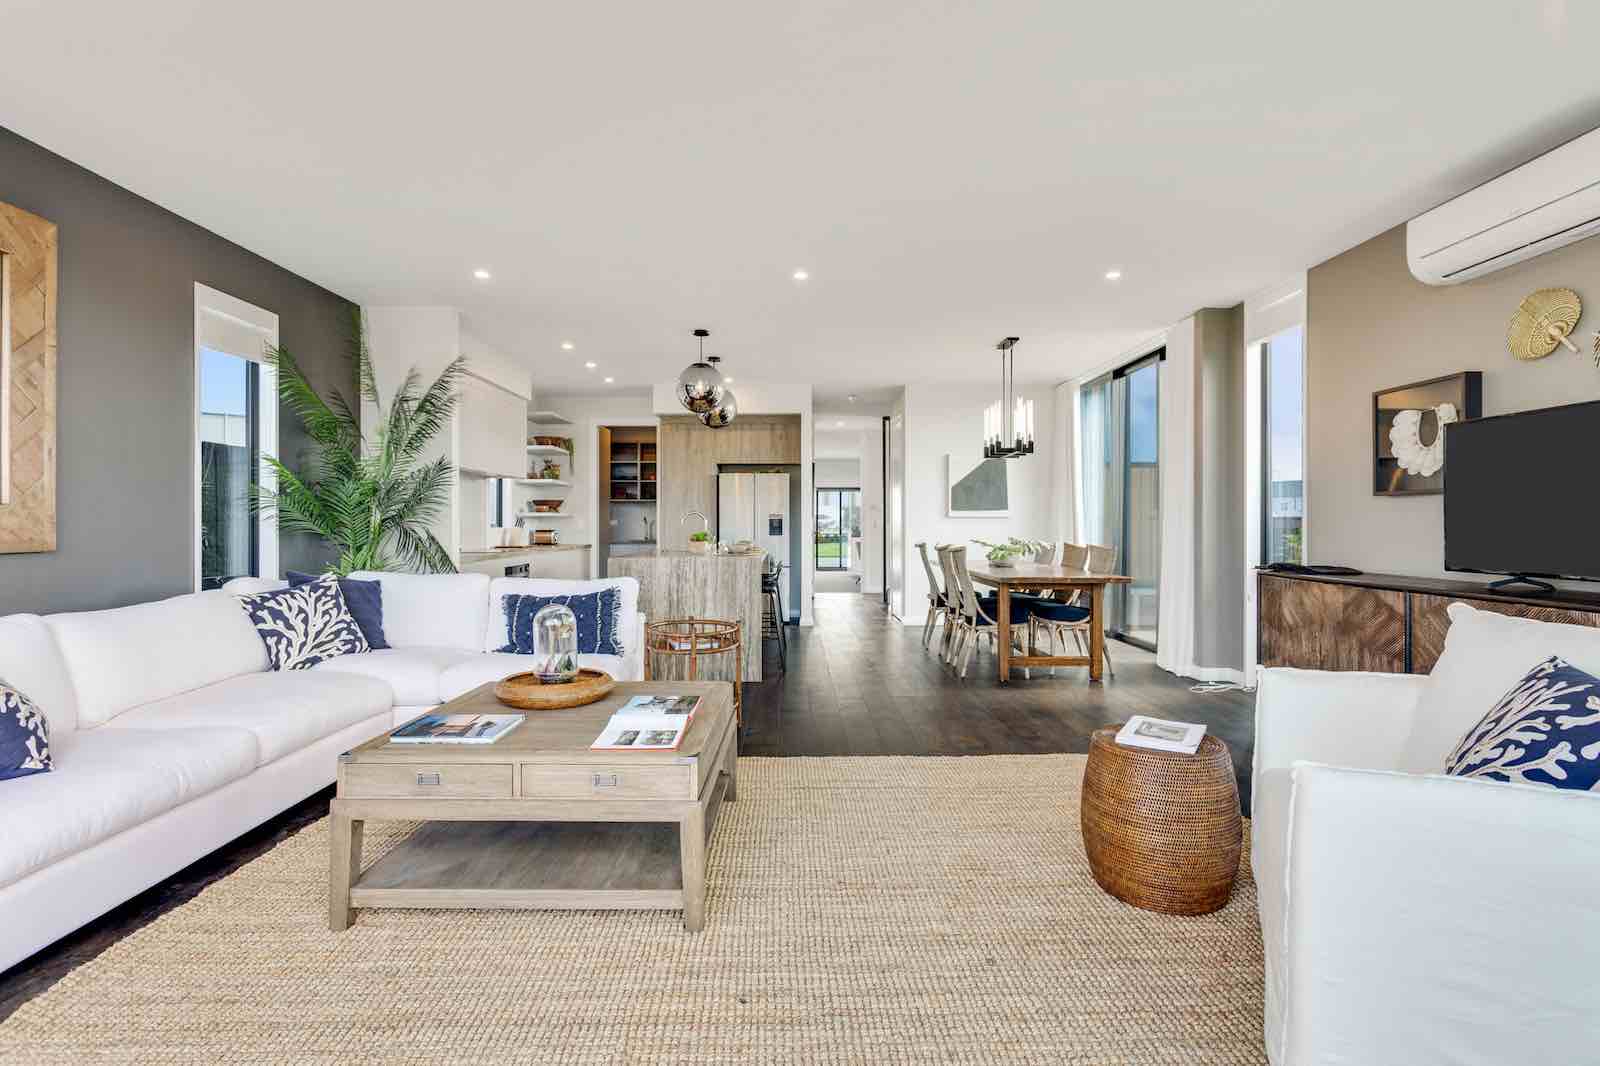 Hobsonville show home - Highend Homes - Auckland Builder